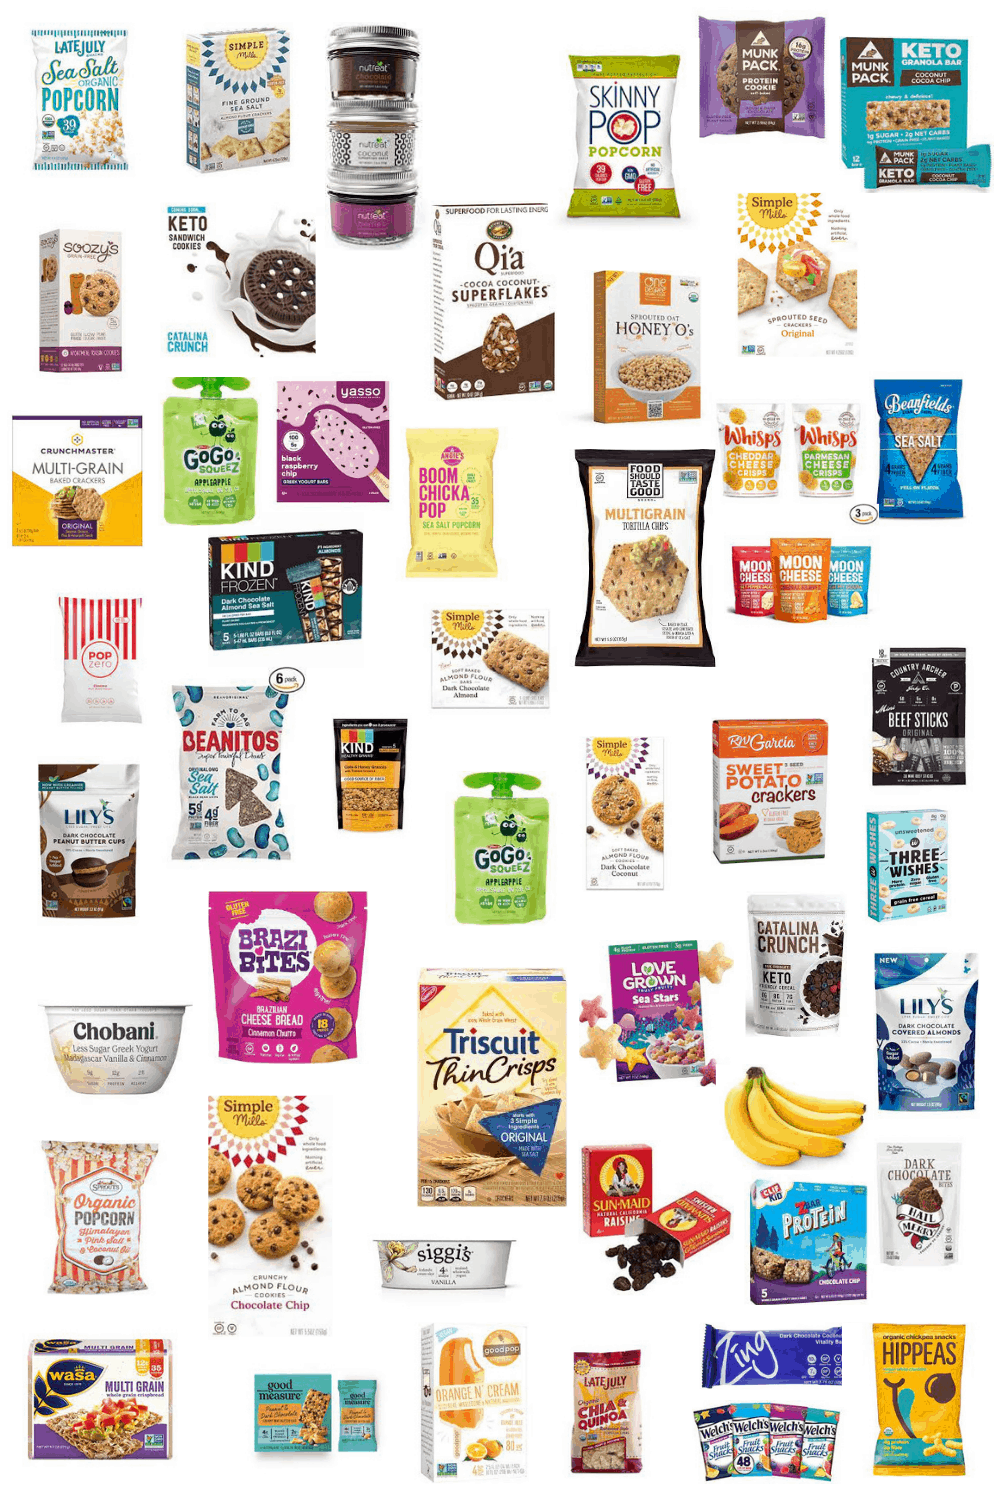 Healthy diabetic snack options